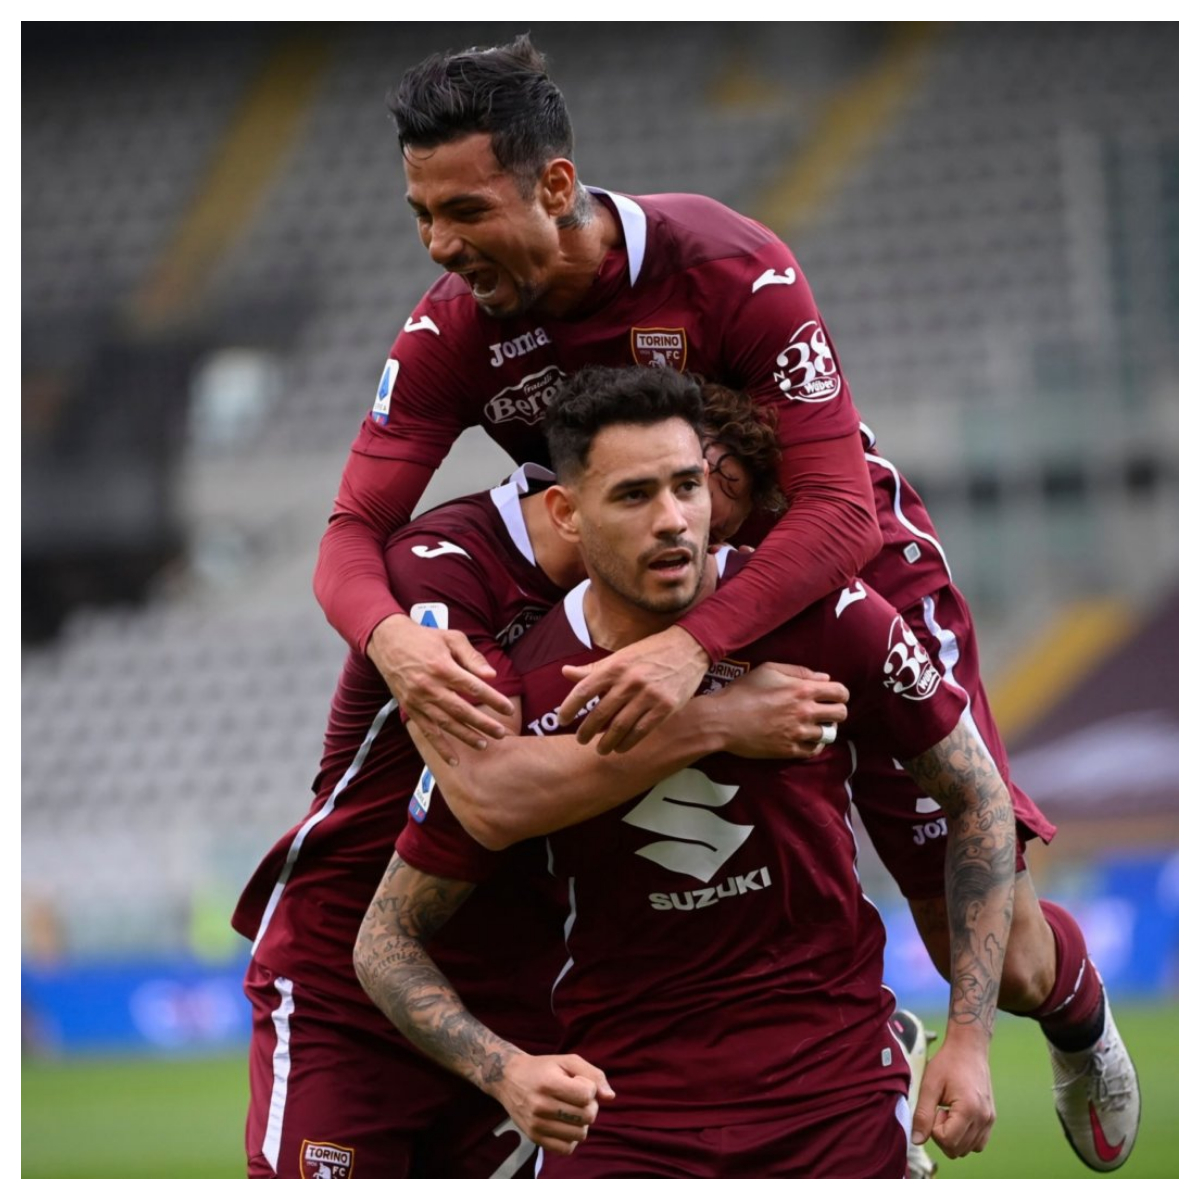 Torino vs AS Roma 24.09.2023 at Serie A 2023/24, Football